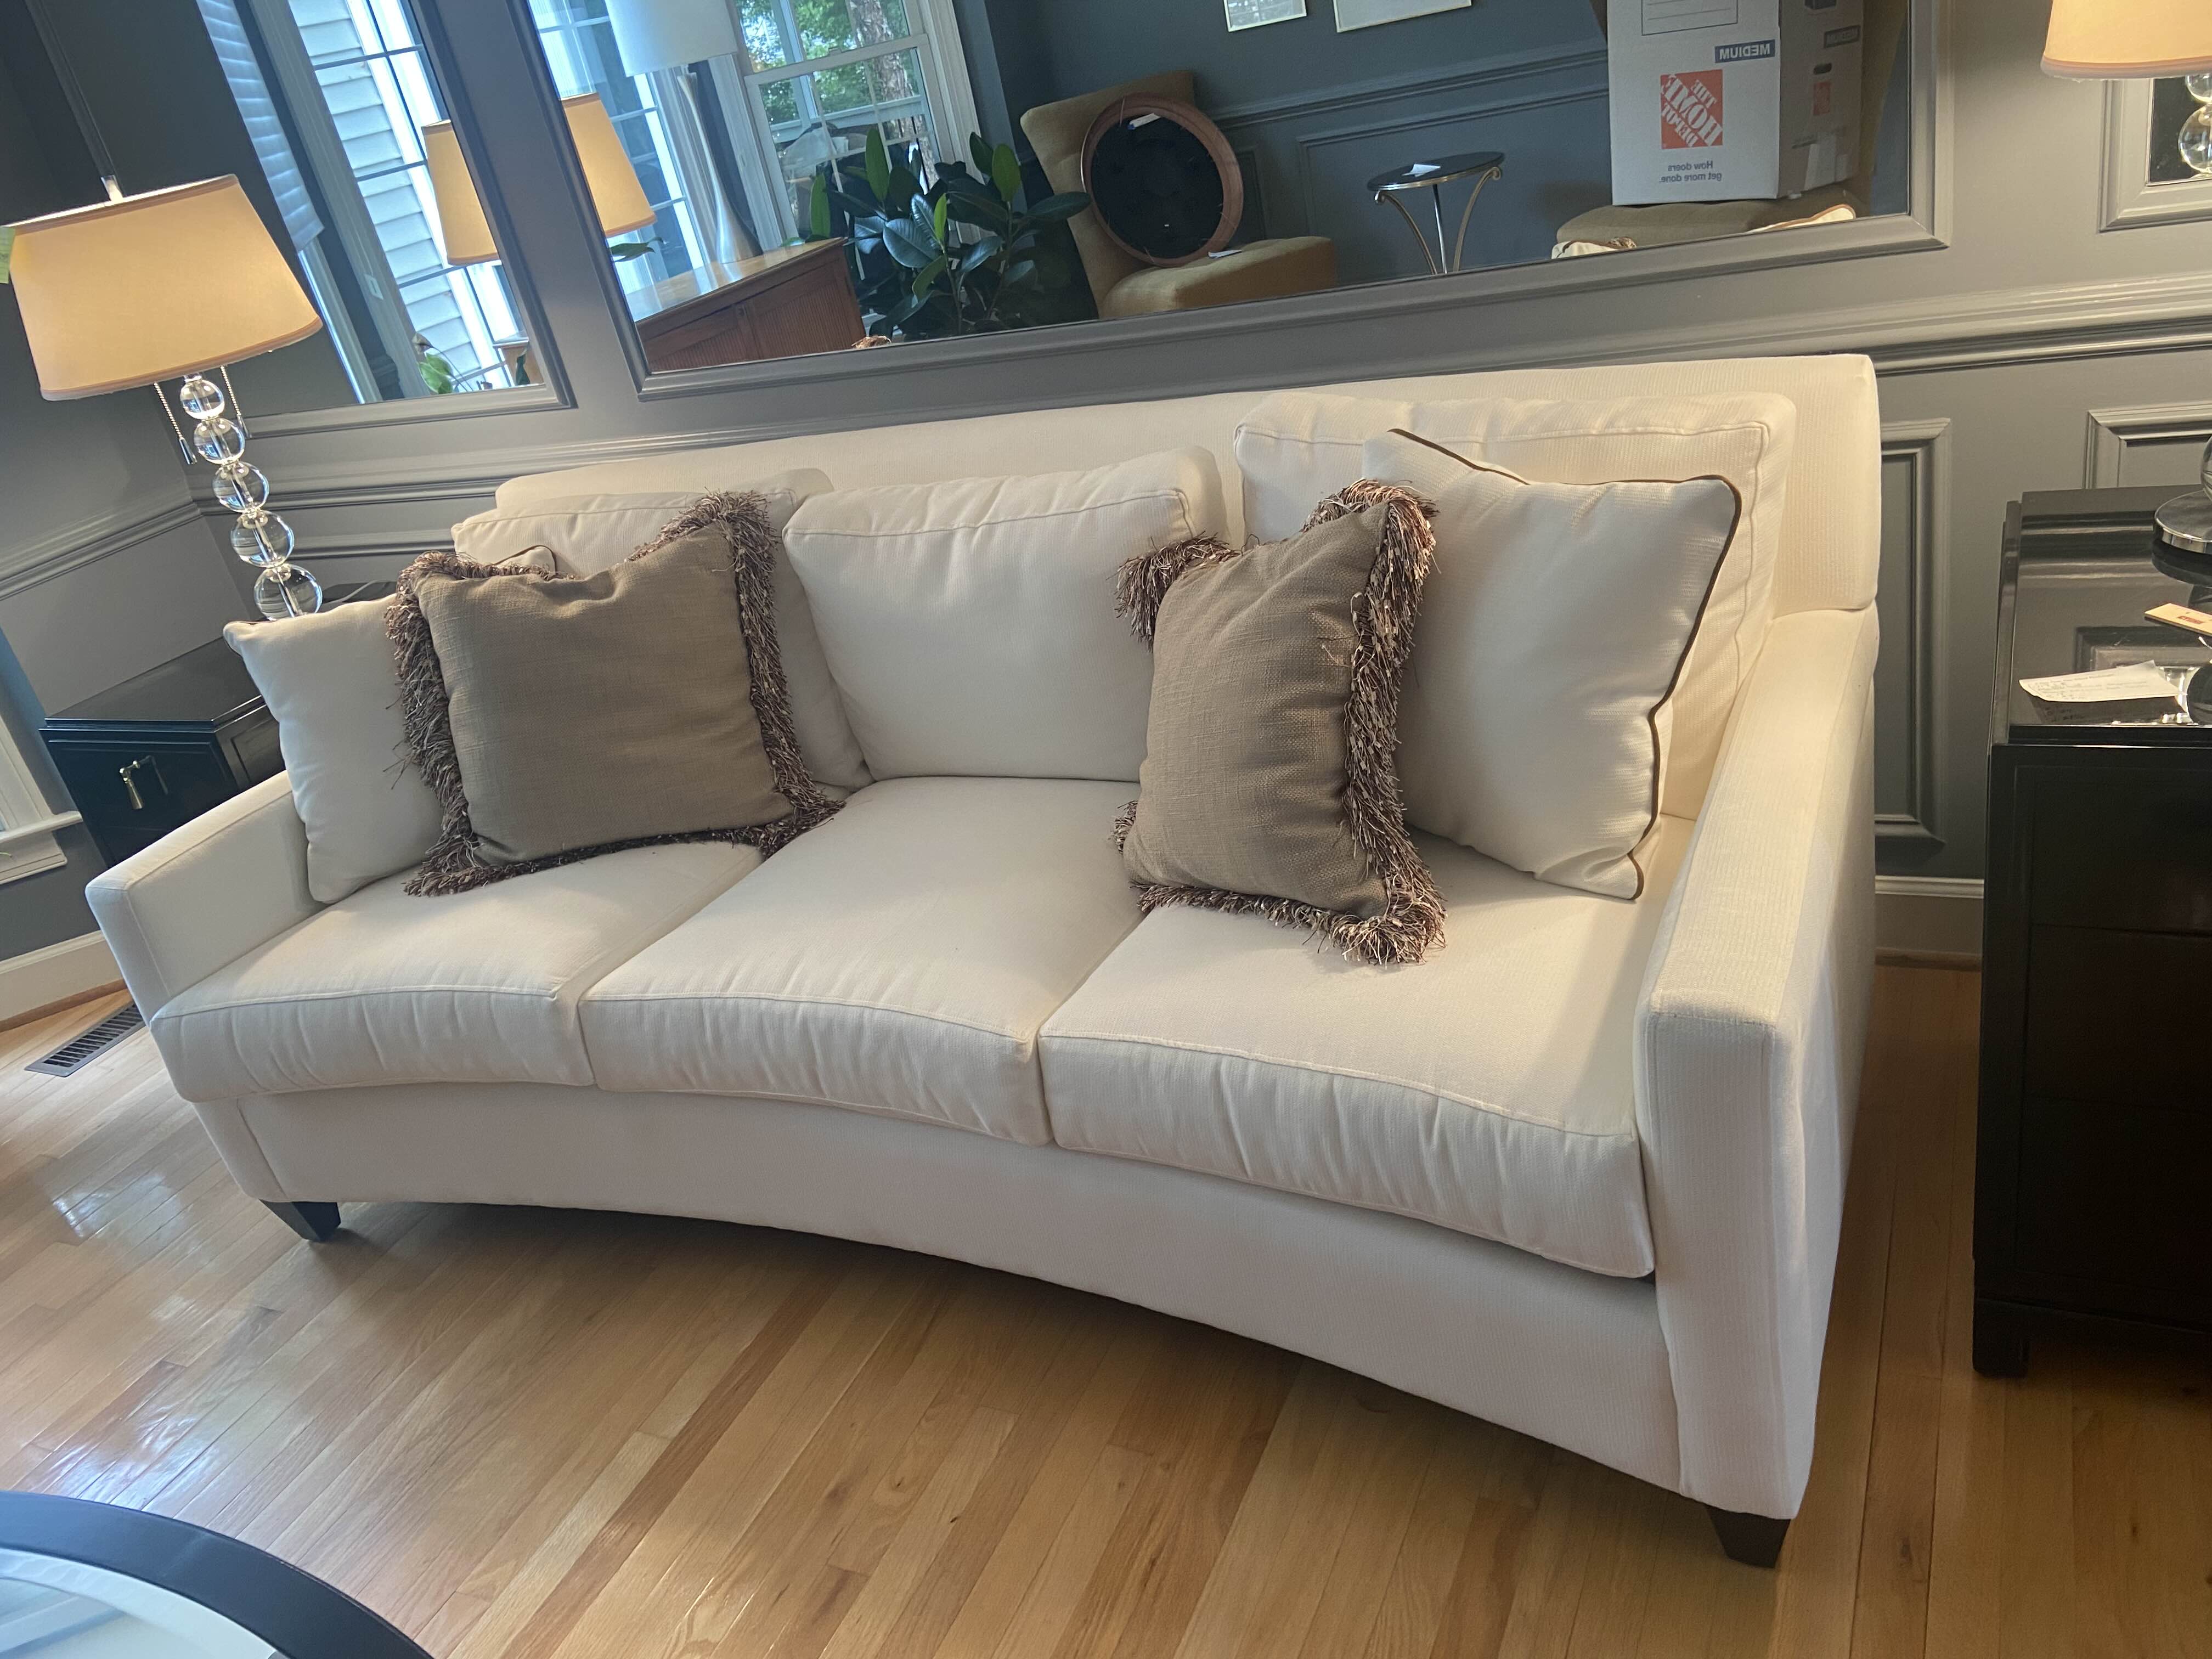 Precedent Cream Colored Couch Curved